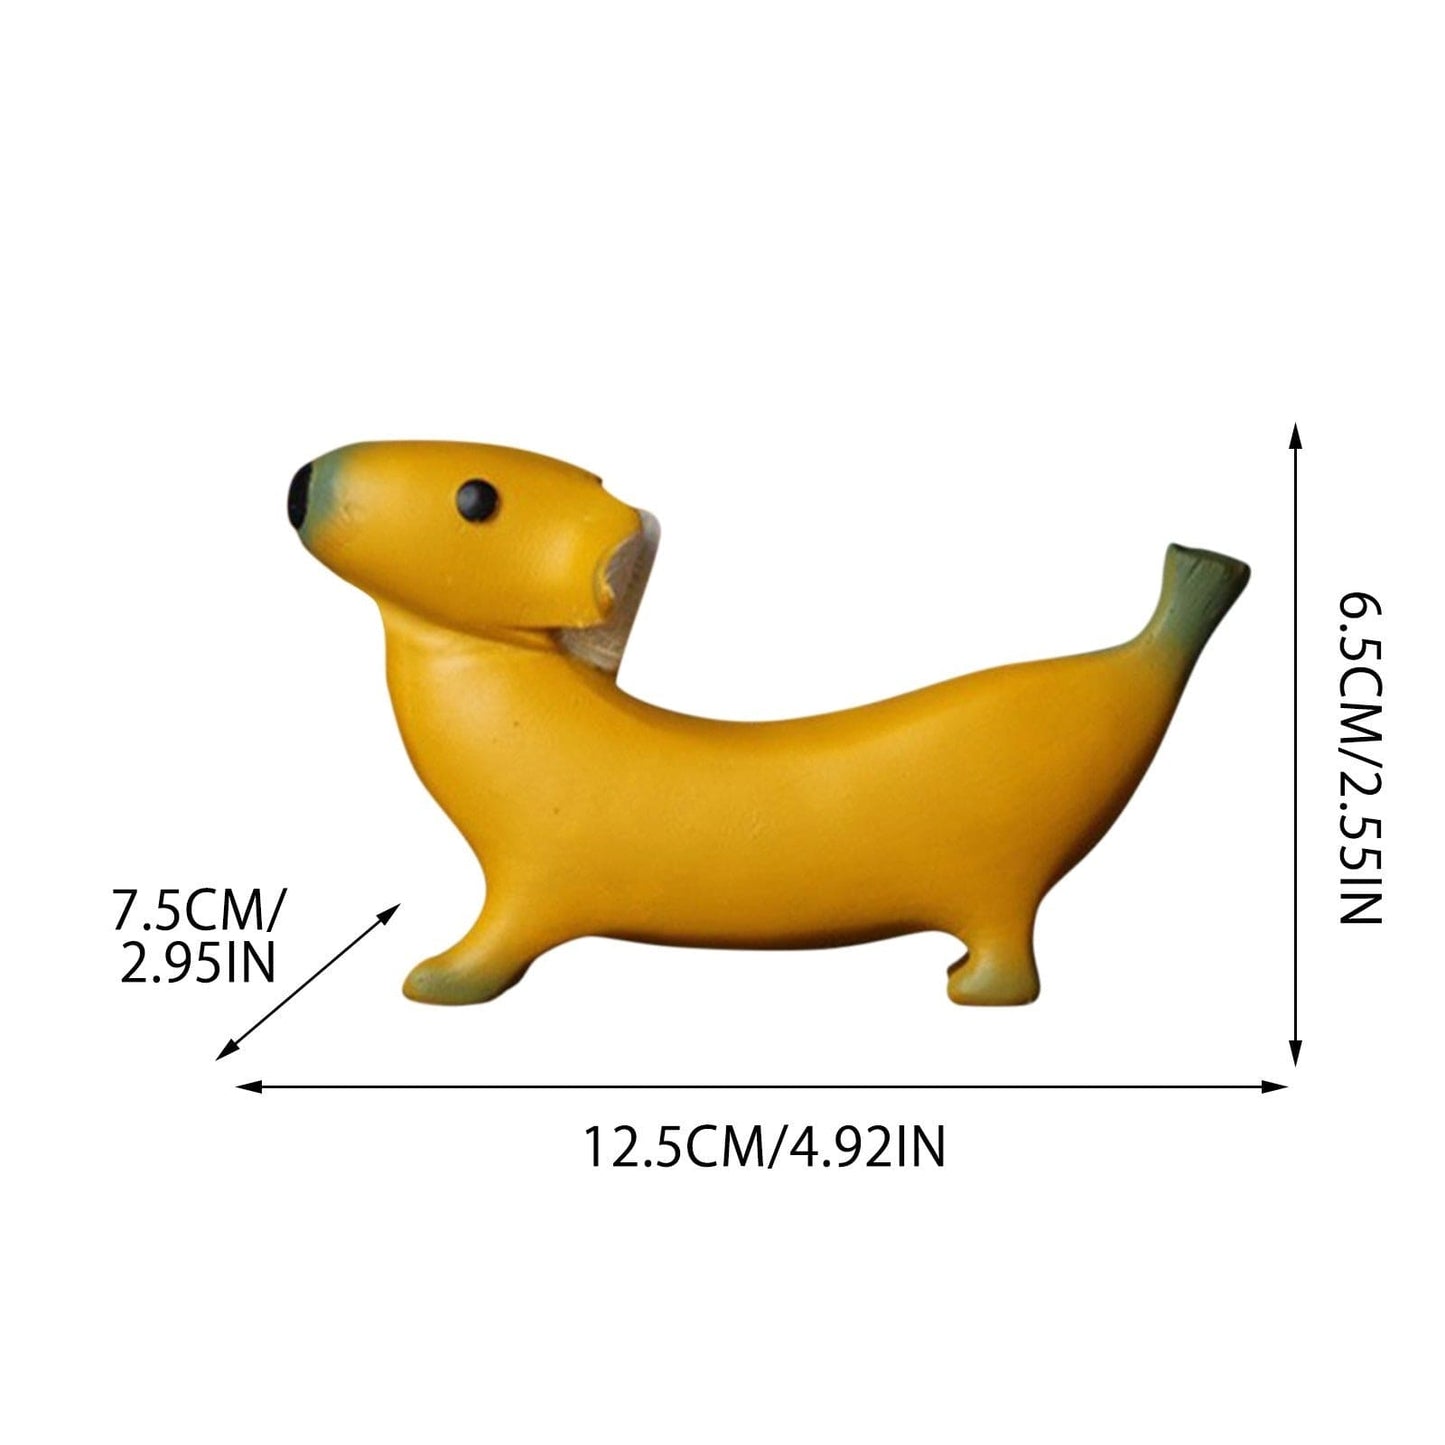 Banana Dachshund Figurines M - 12x6.5cm/4.92"x2.55" The Doxie World